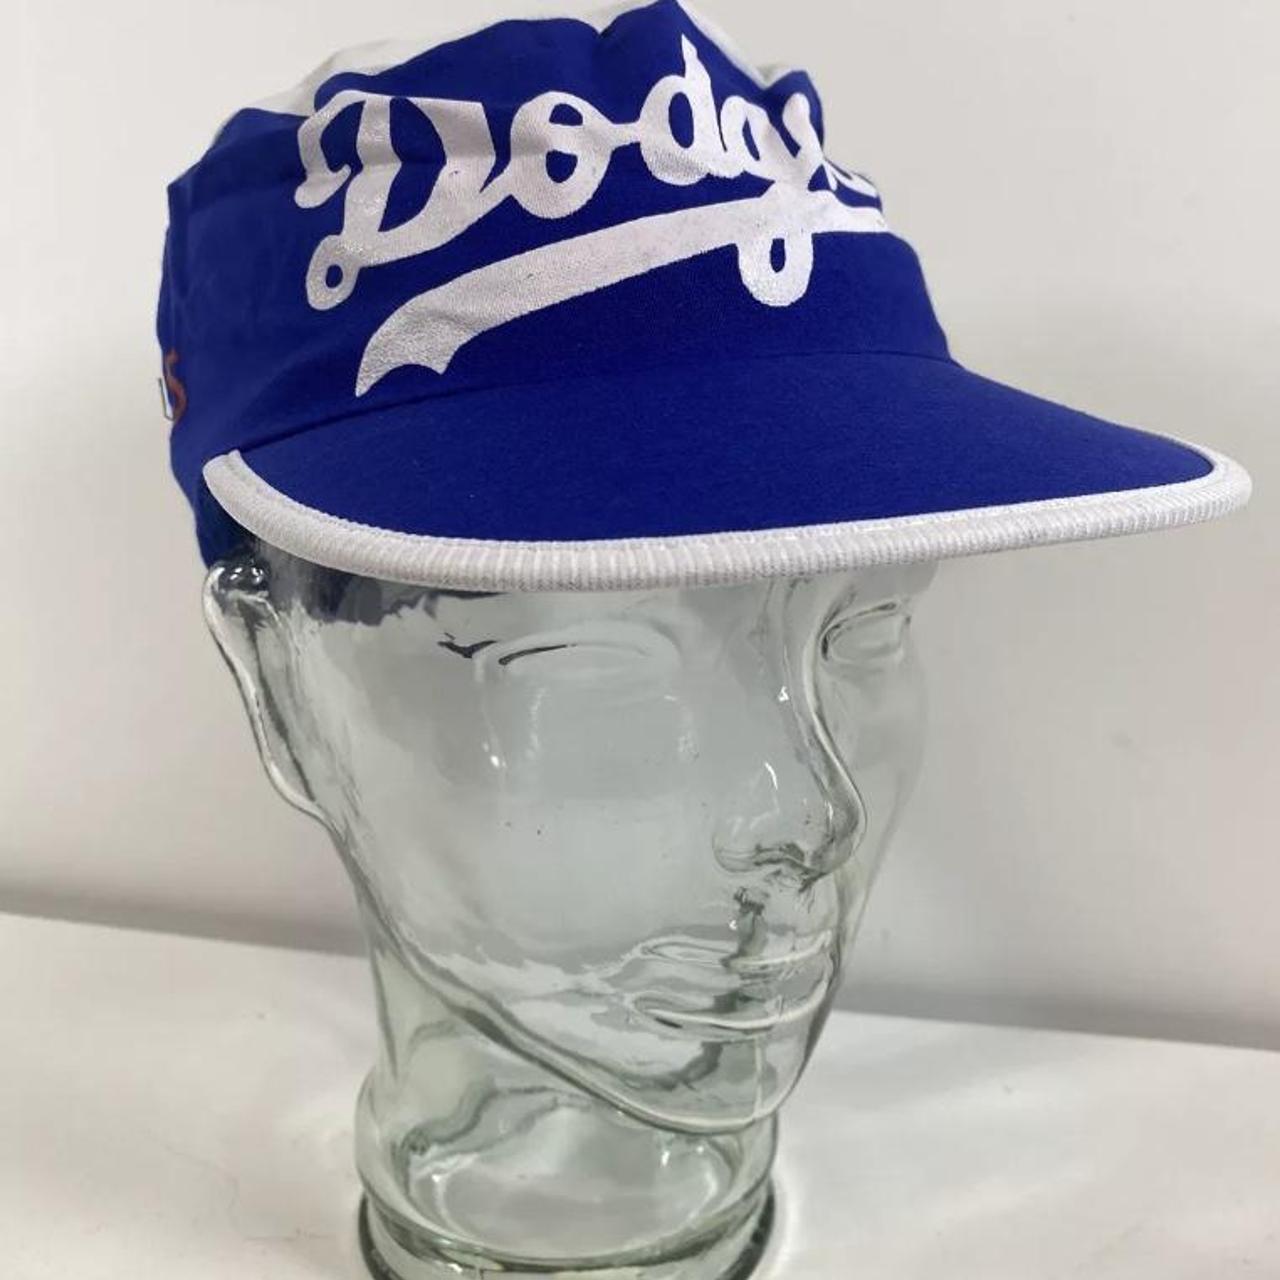 Vintage Los Angeles Dodgers MLB Hat